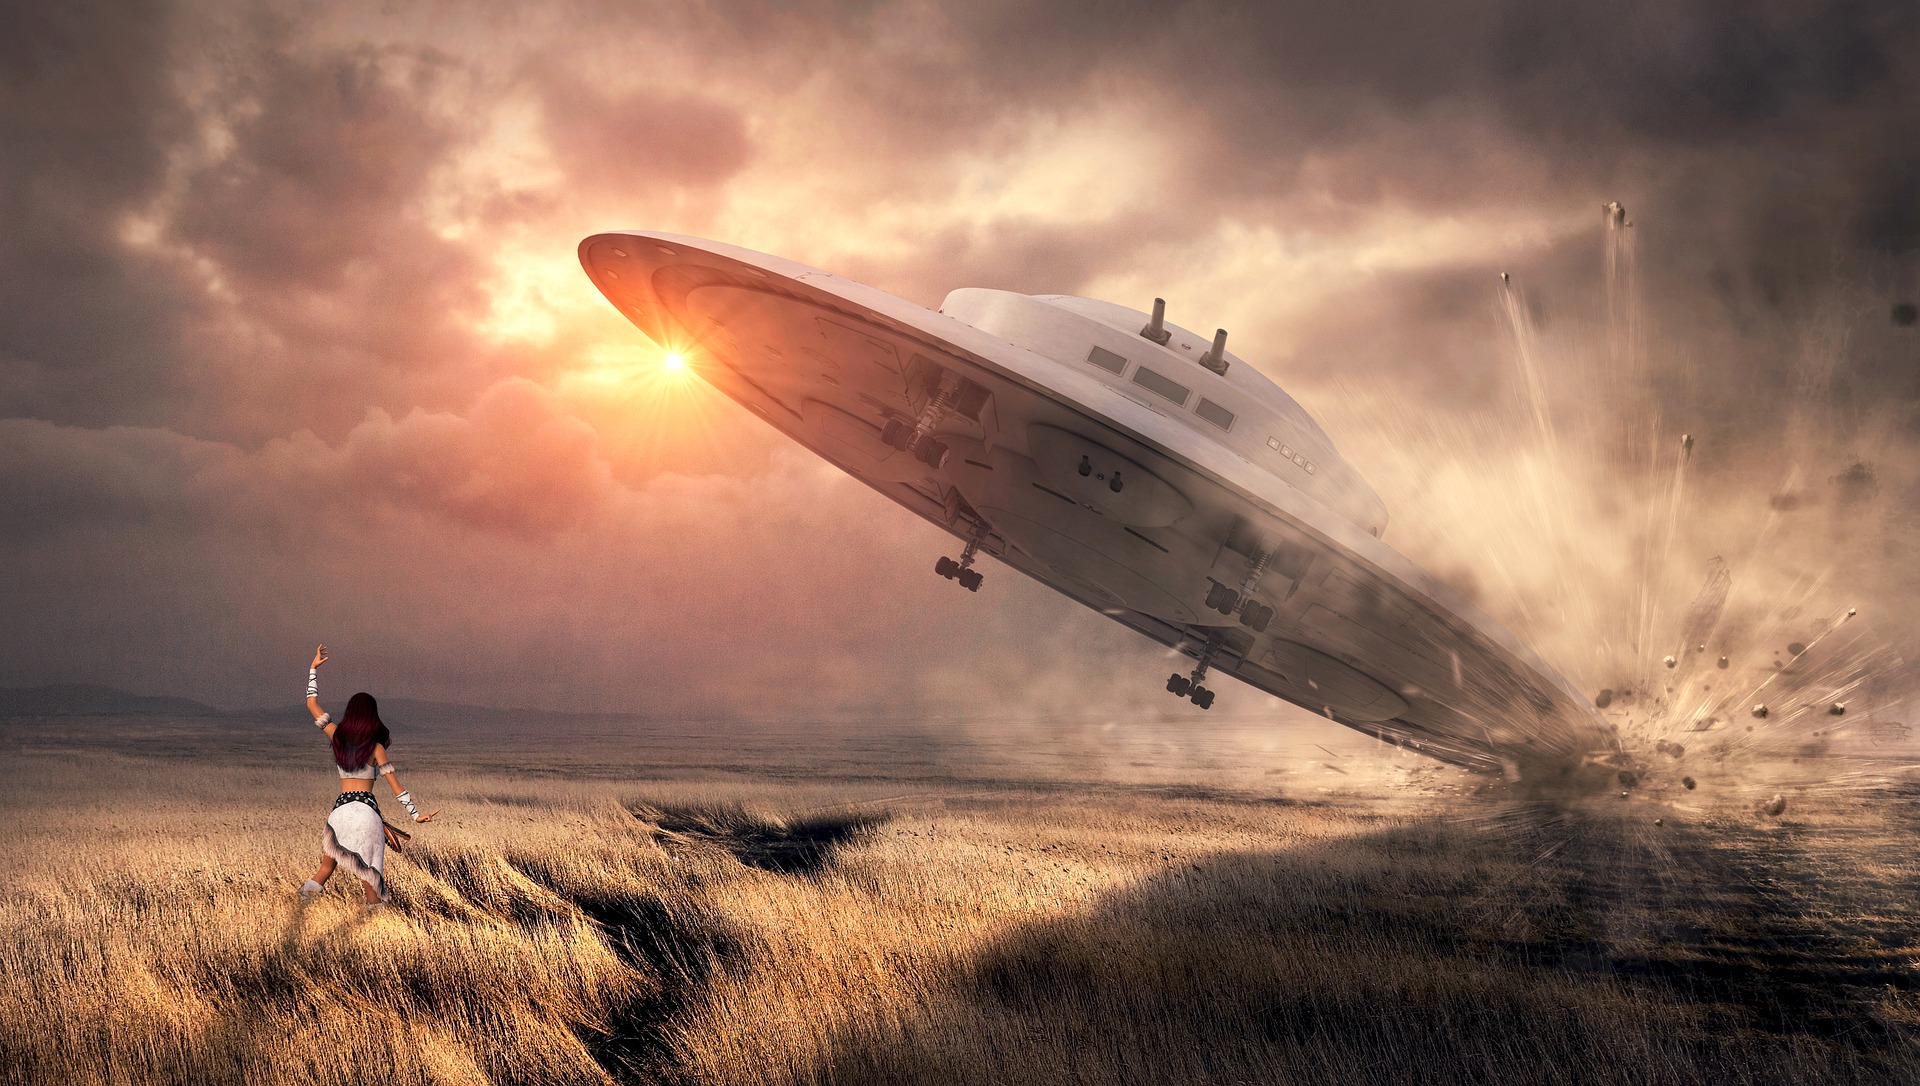 UFOs in Wartime: fantasy art: Image by Stefan Keller from Pixabay